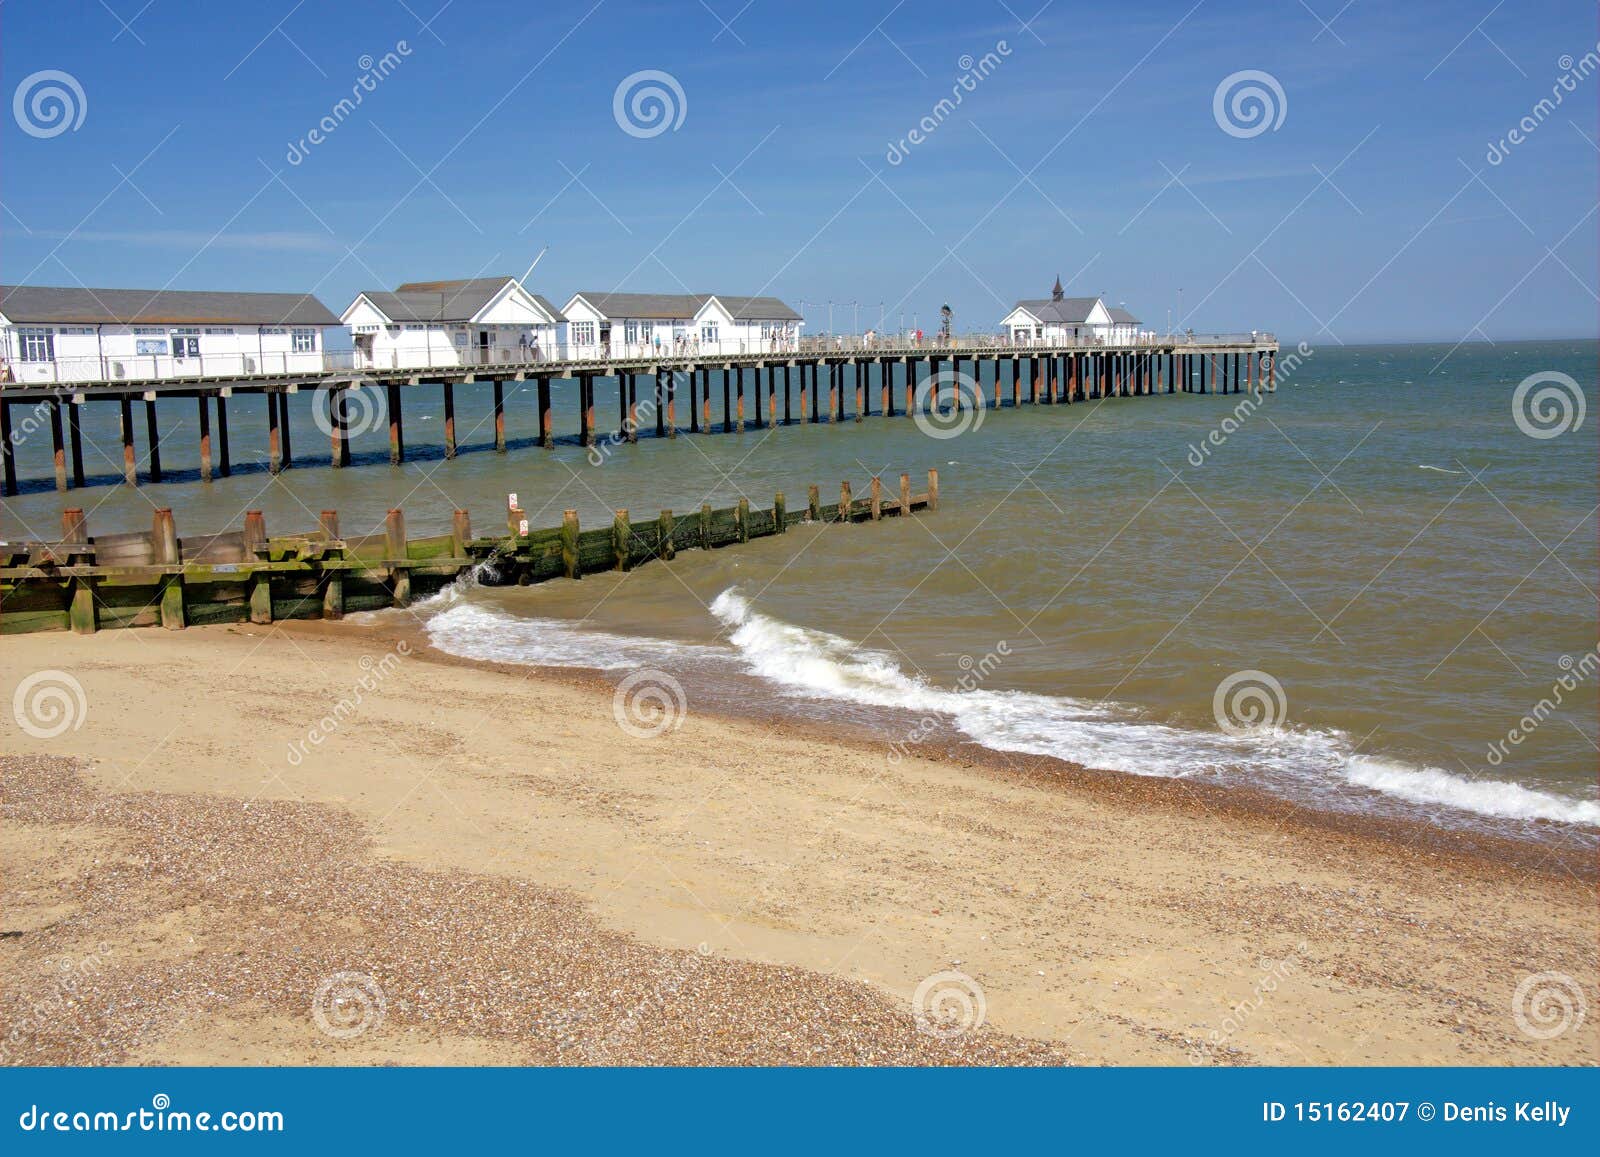 seaside pier, england